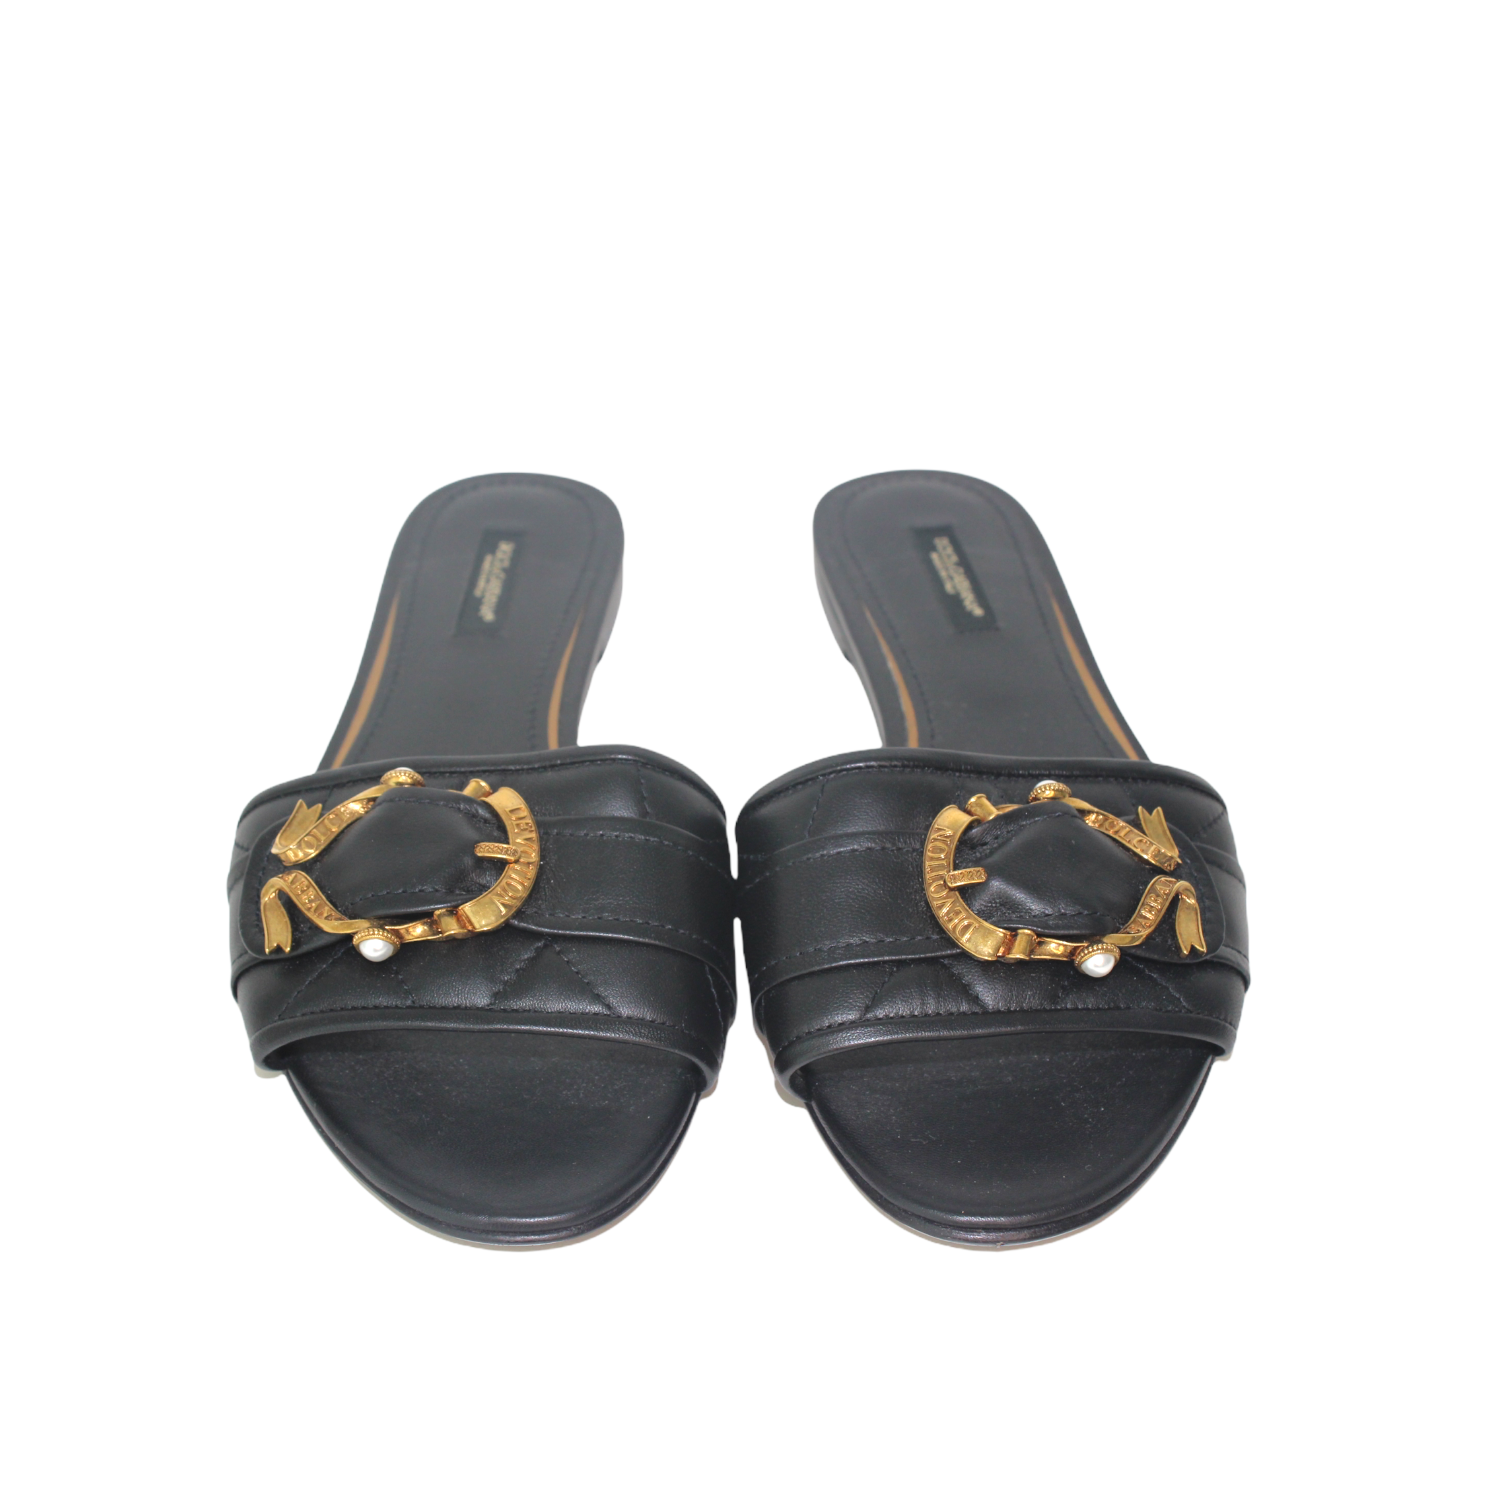 Dolce & Gabanna sandals black size 39 EU - The Luxury Flavor